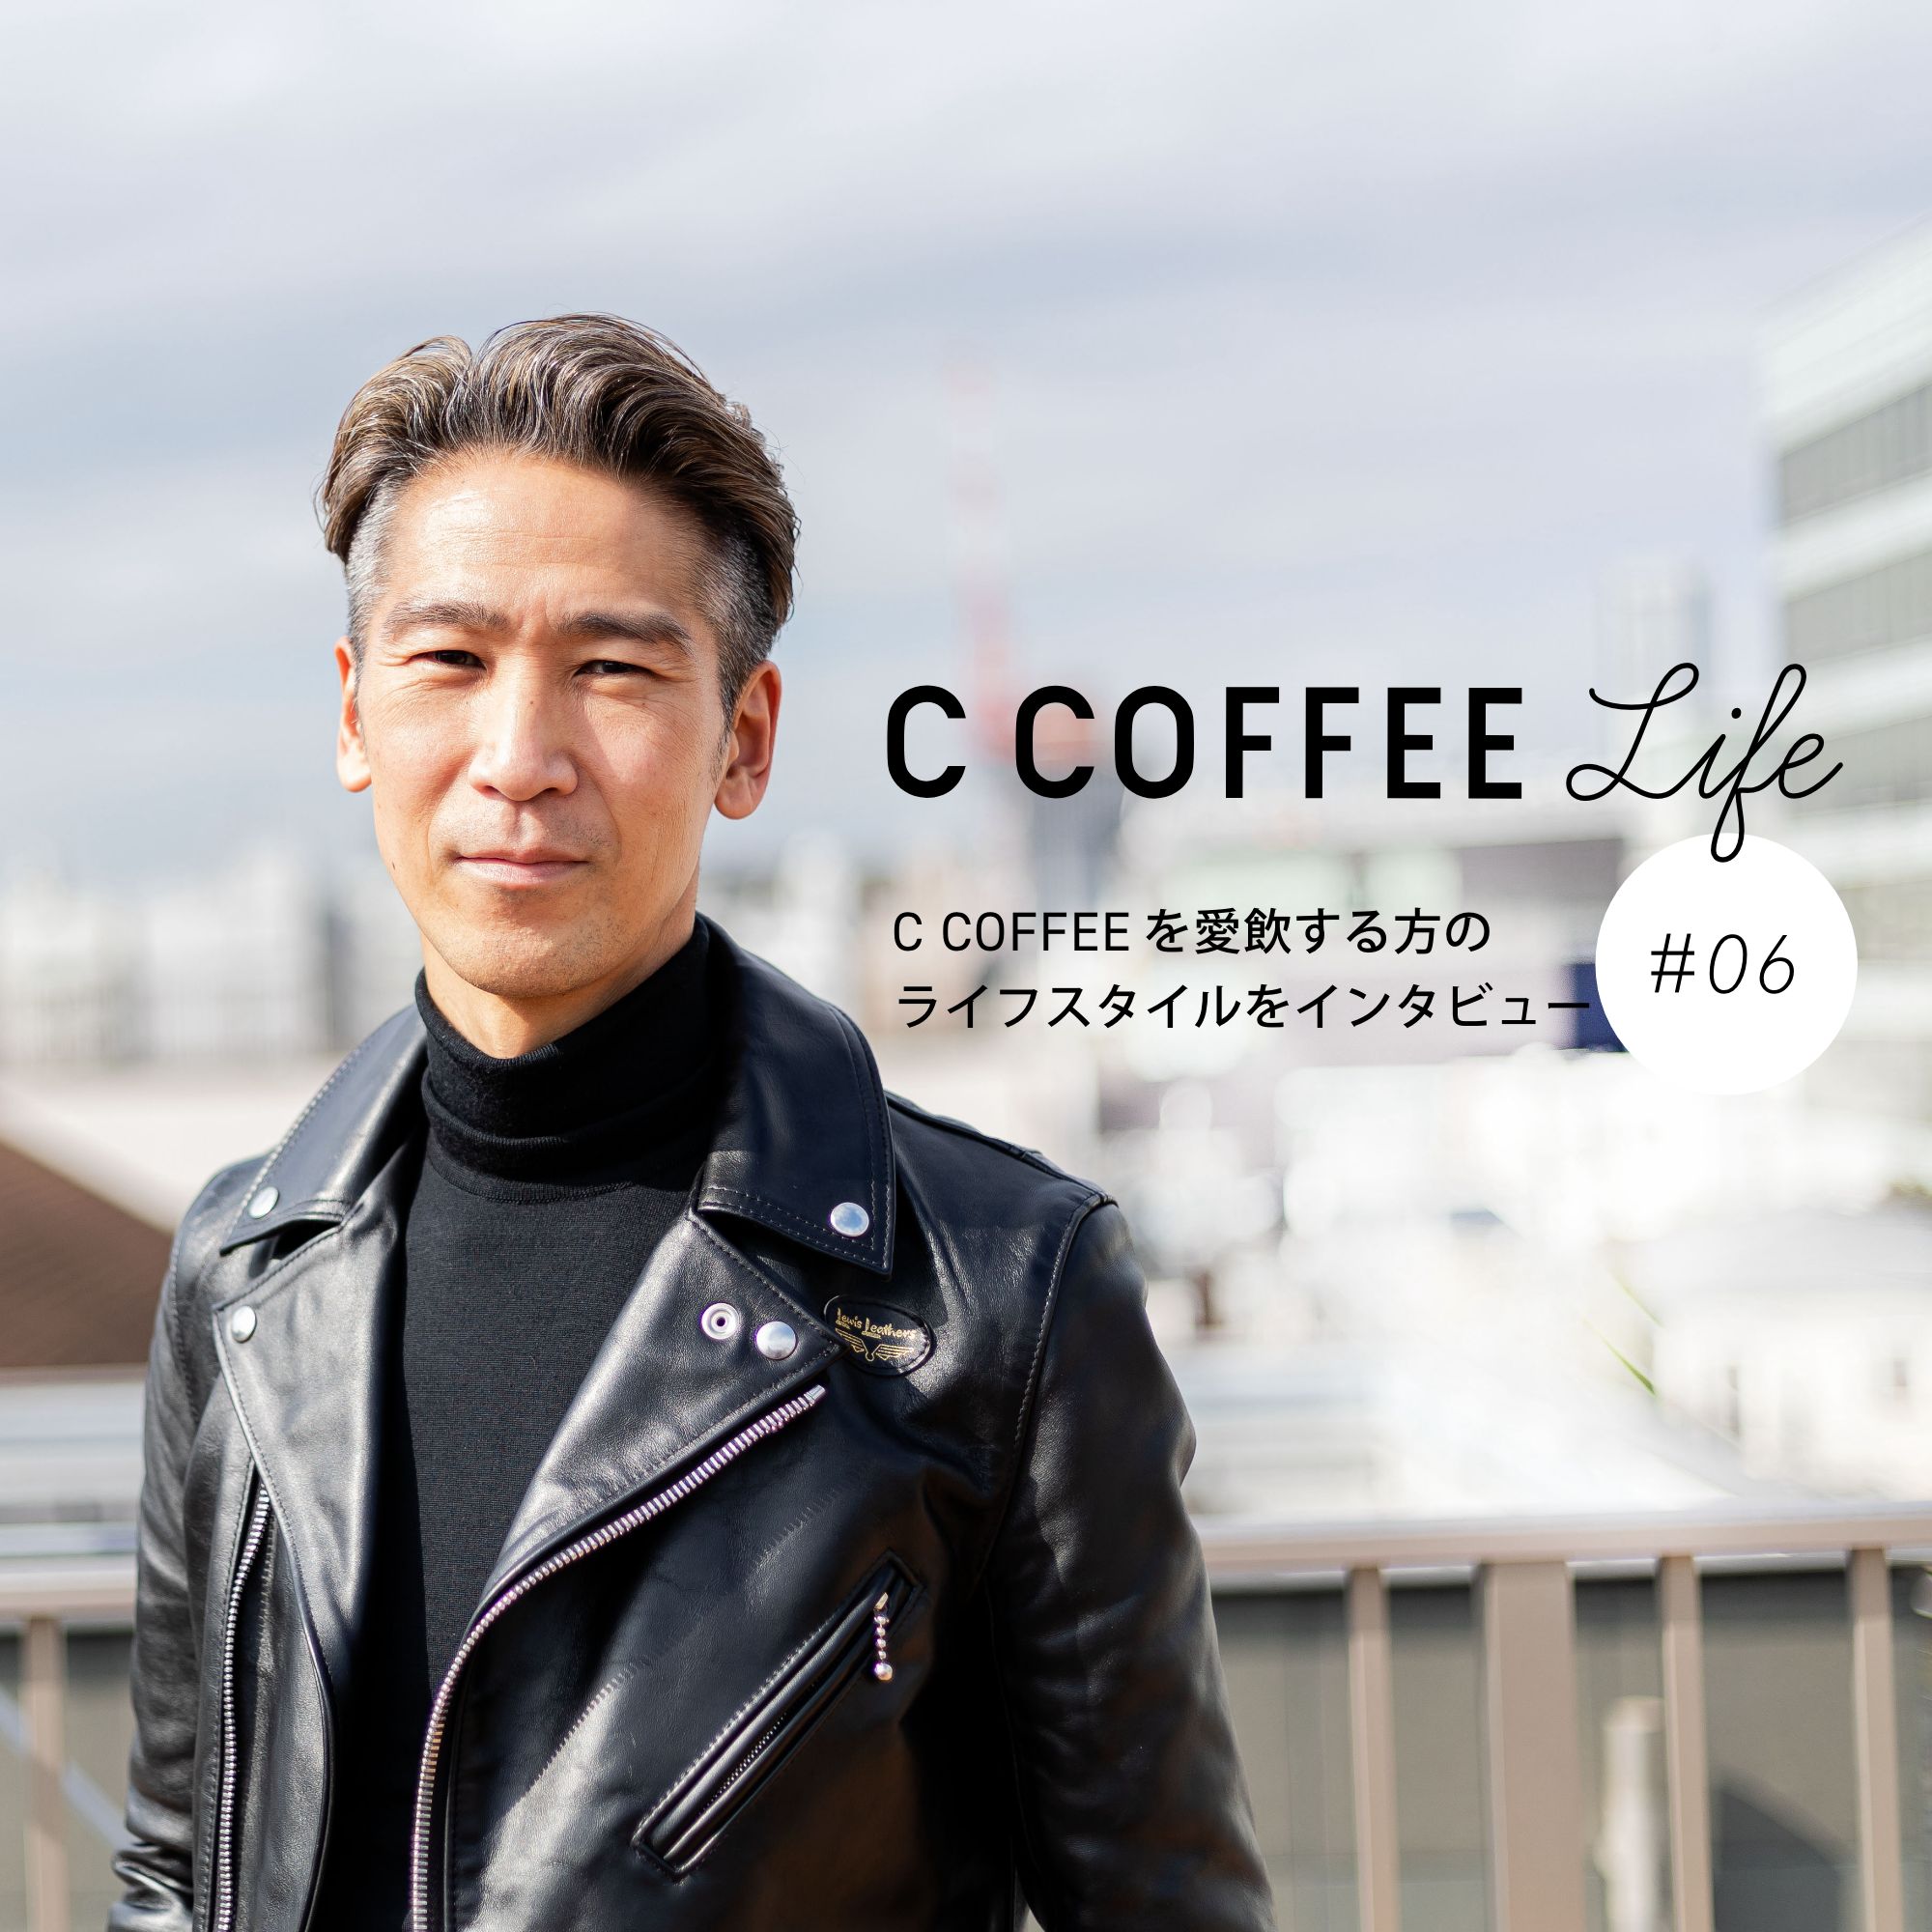 C COFFEE Life  #06  映像ディレクター 安田 暁さん